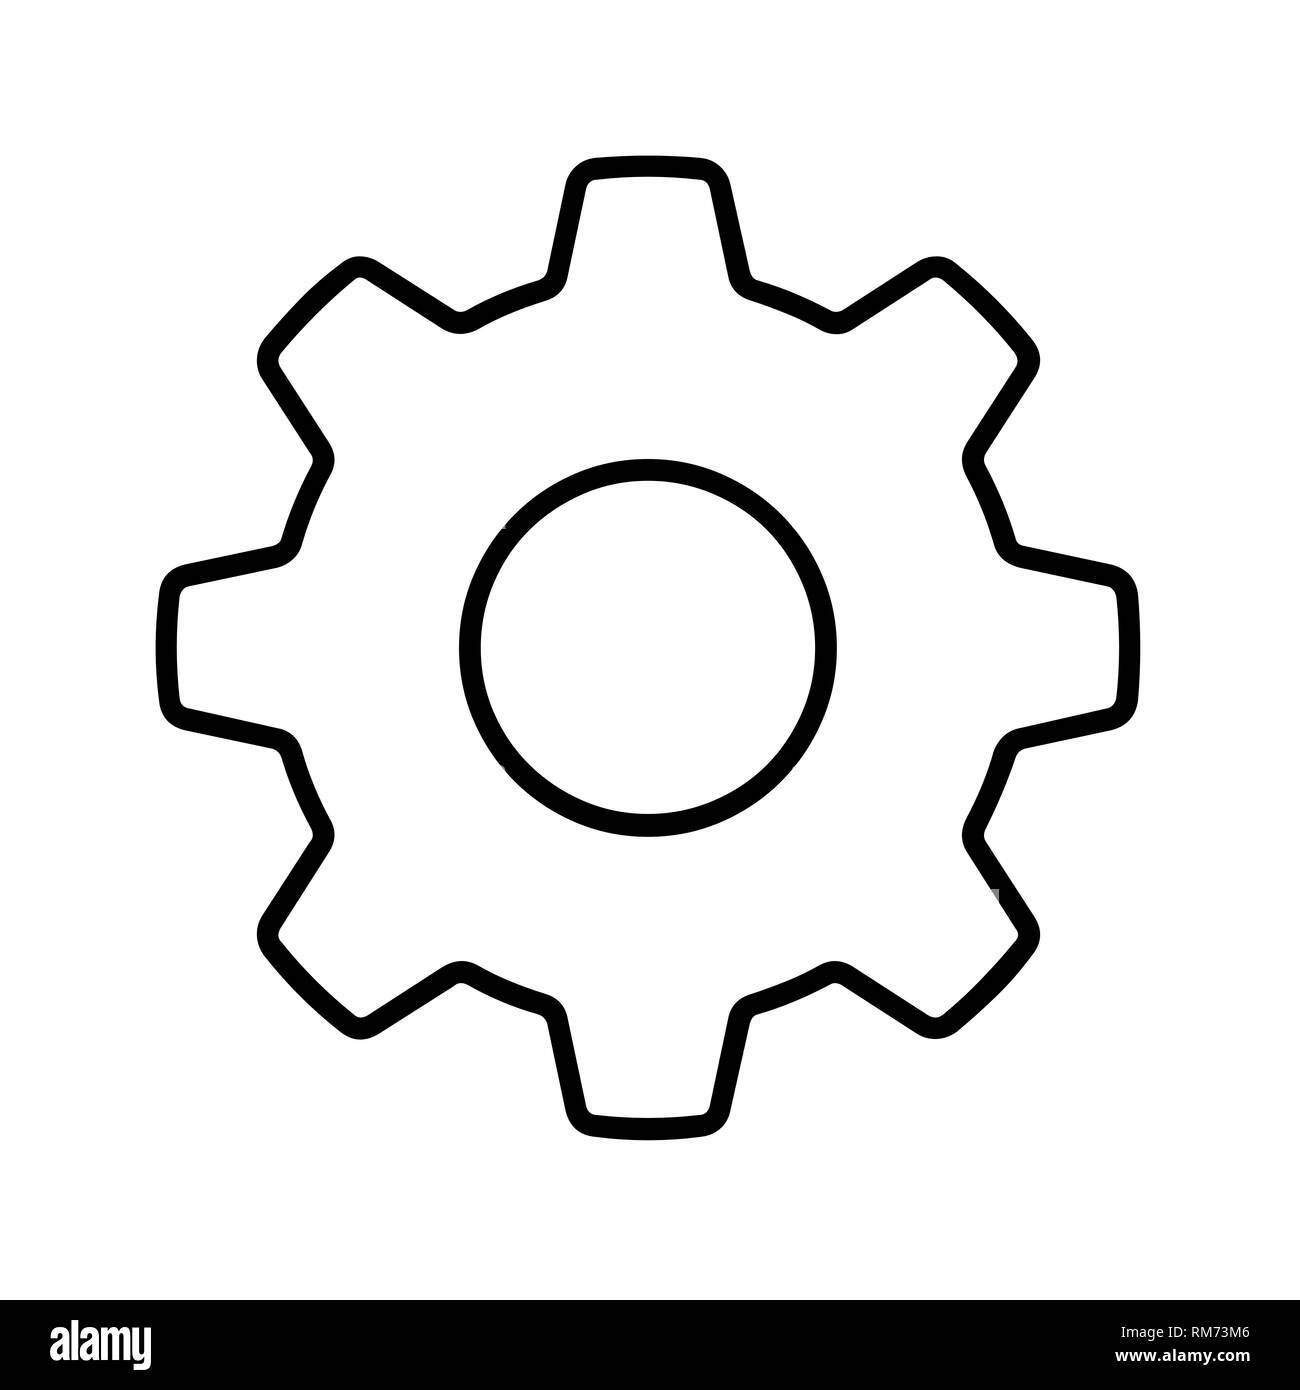 Gear symbol icon illustration Stock Photo